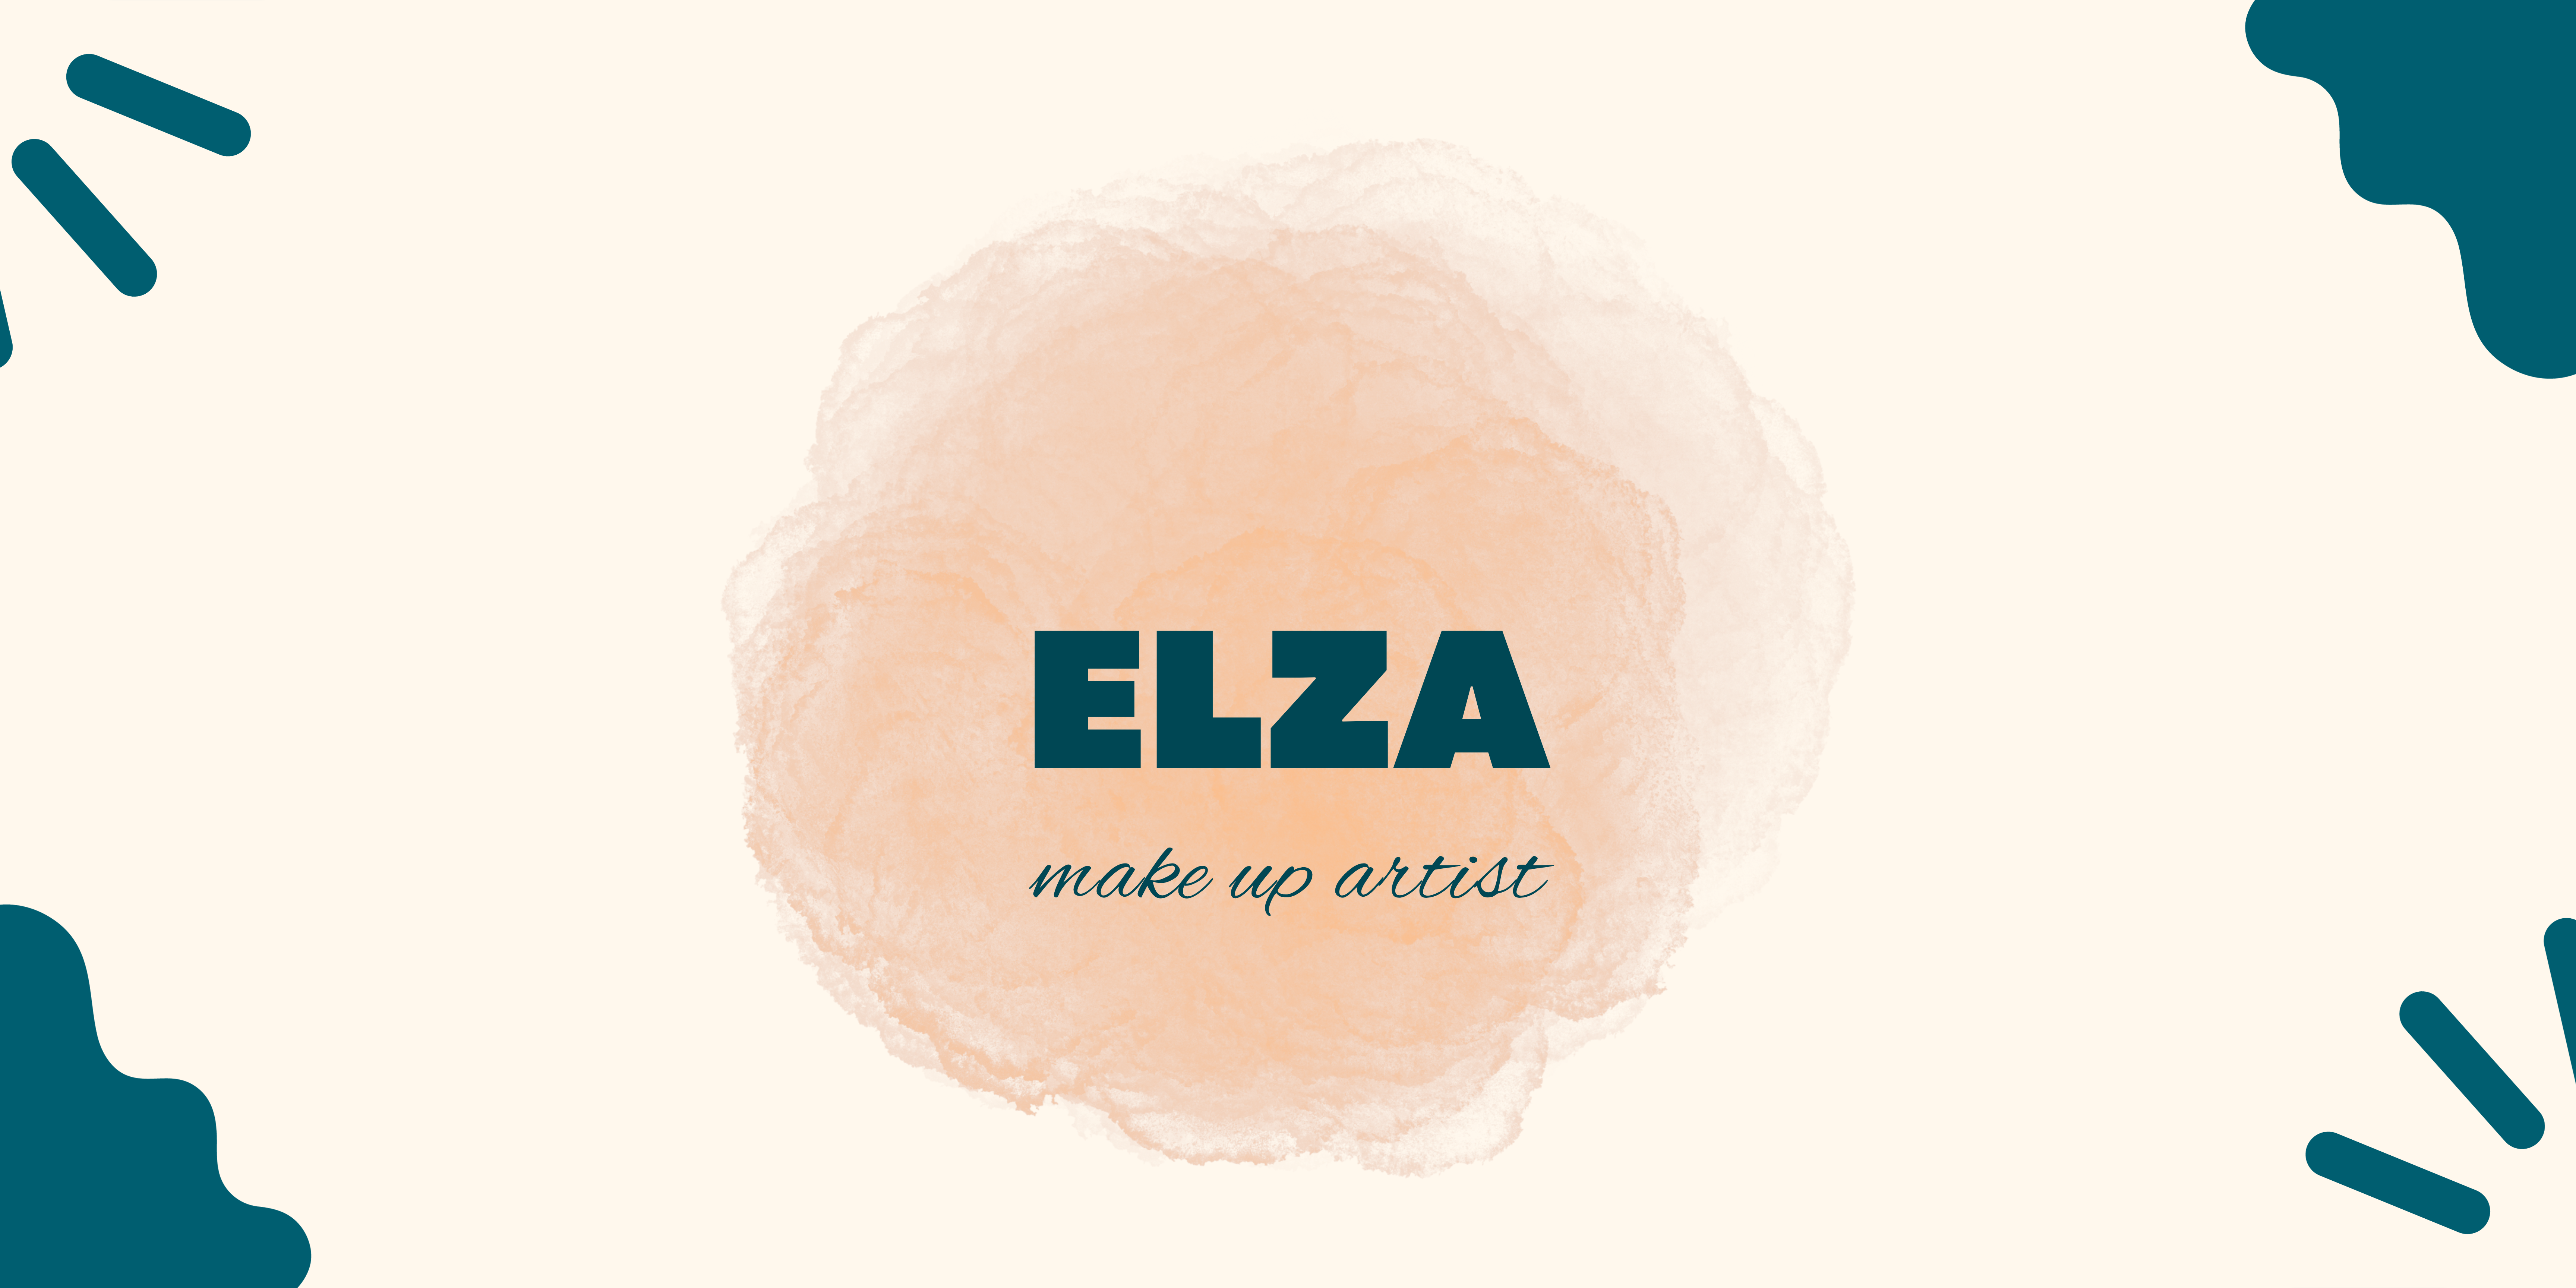 elza make up artist